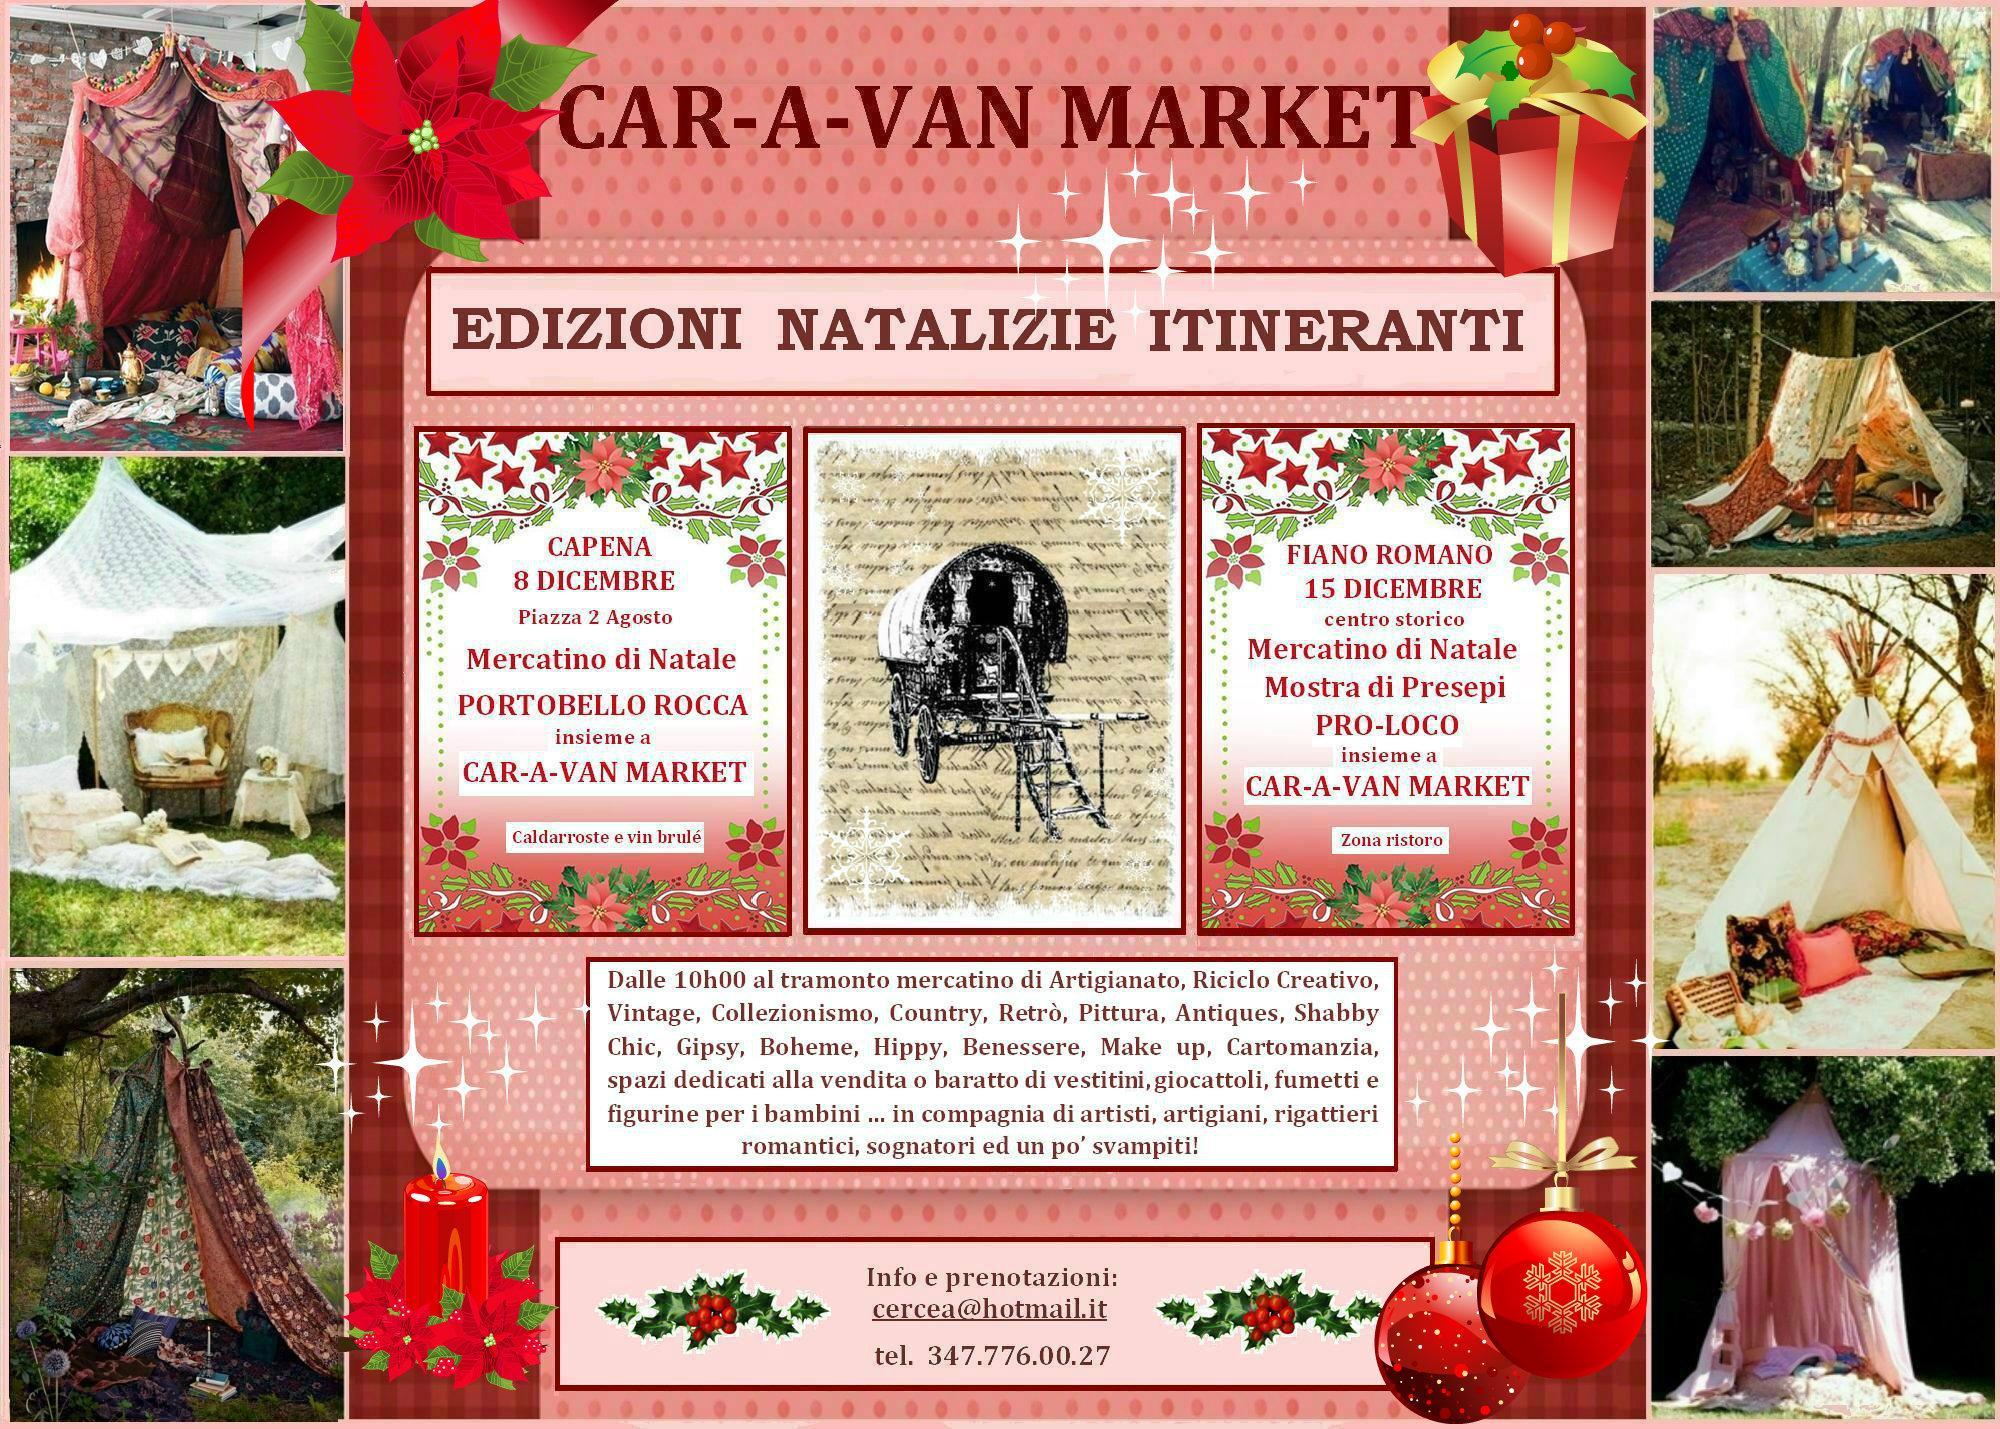 CAR - A - VAN MARKET: EDIZIONI NATALIZIE ITINERANTI - 26/11/2013